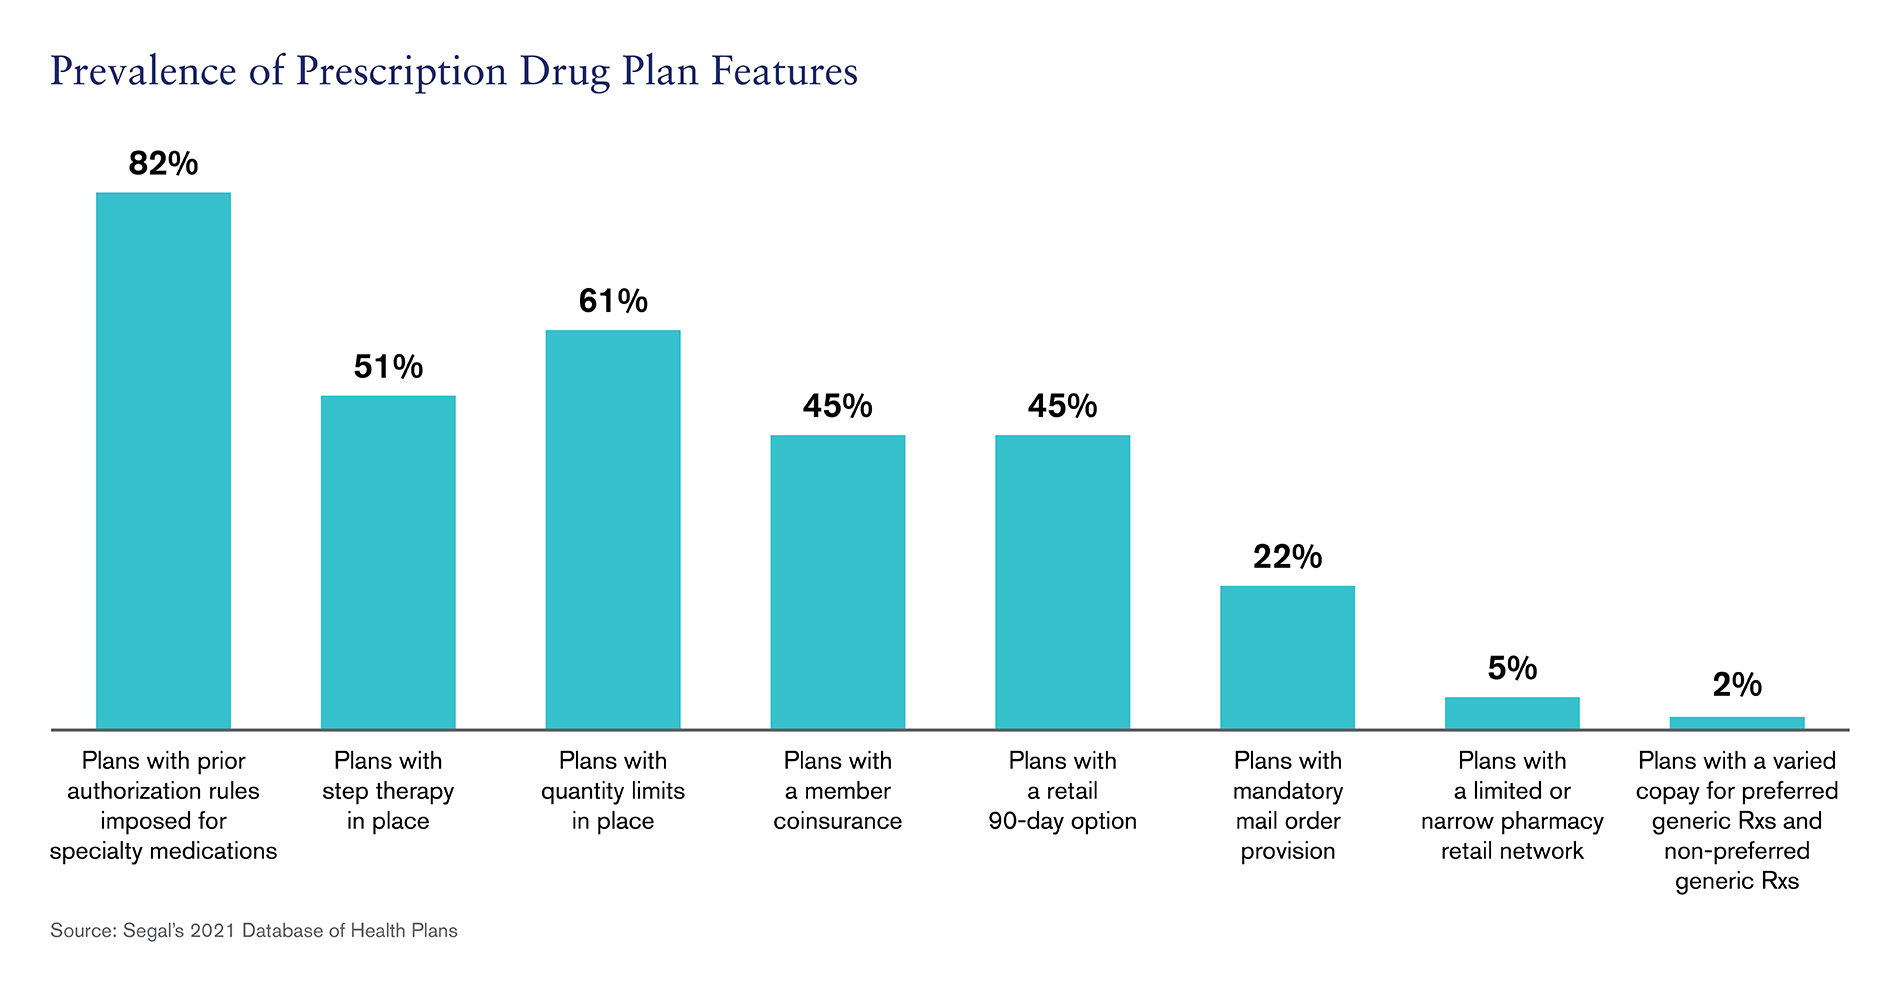 Prescription Drug Benefits  - Prevalence of Rx Plan Features